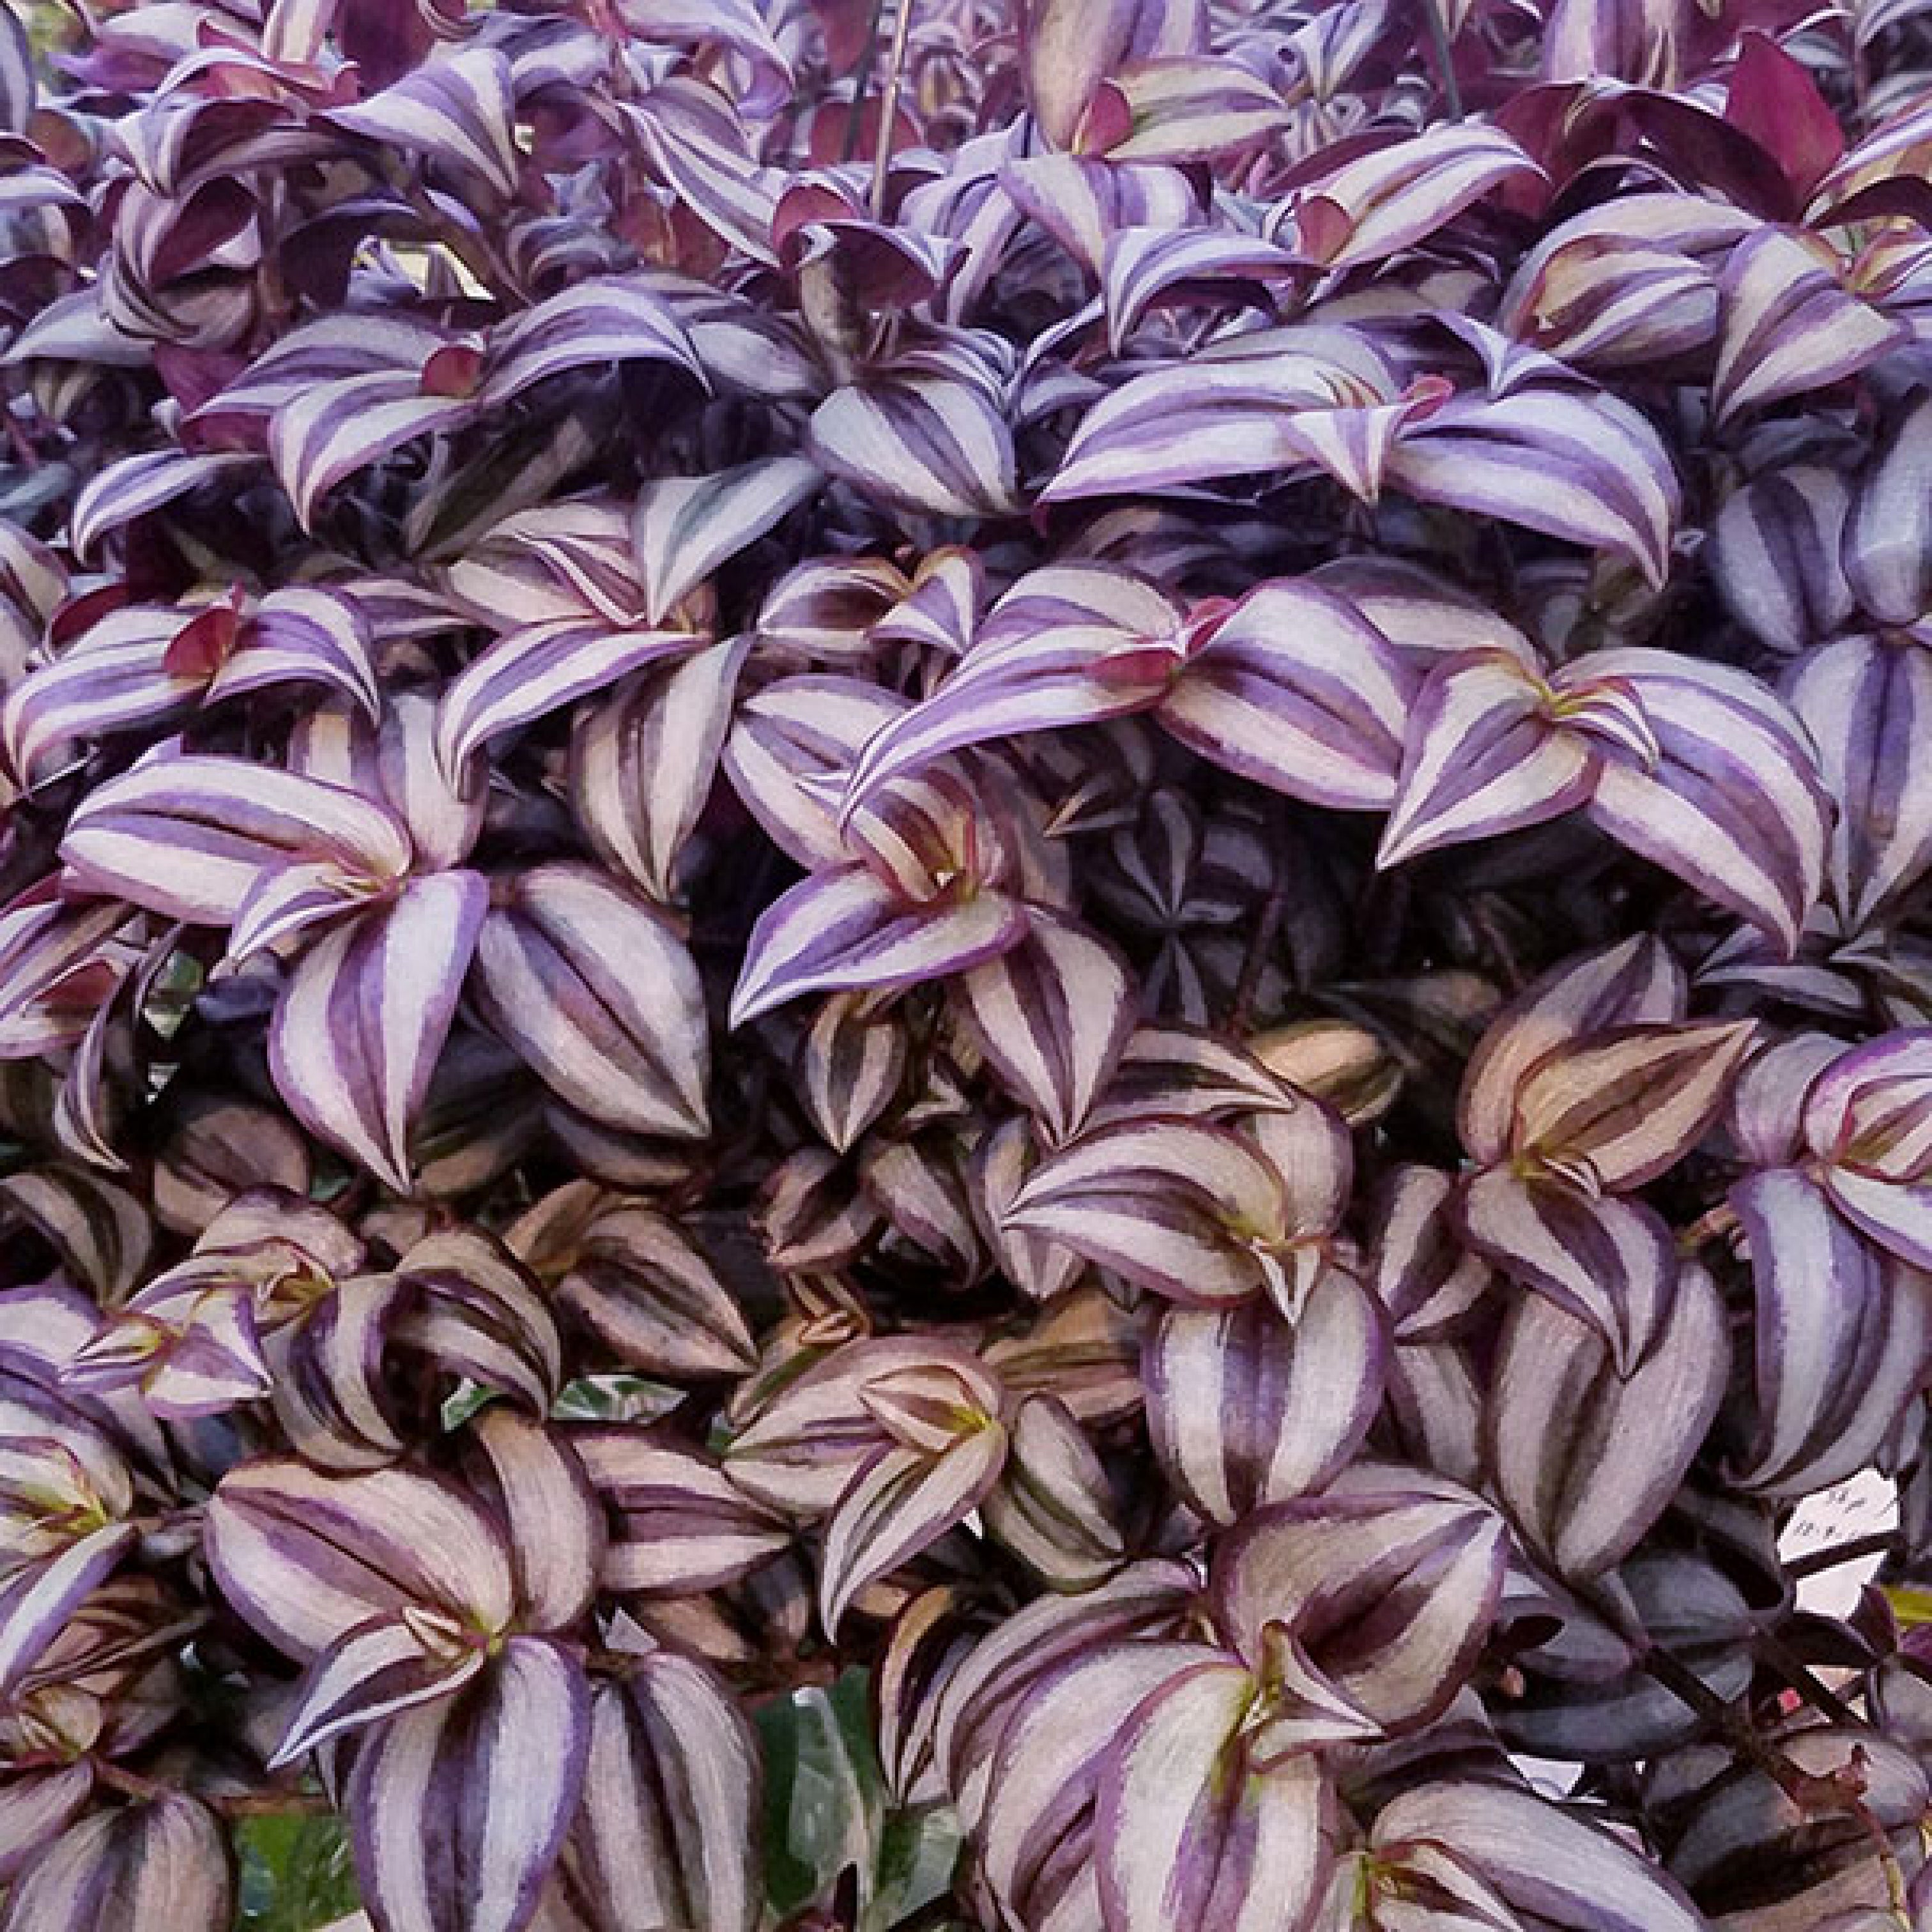 Tradescantia zebrina "Purple Tinge" (Inchplant) Leaves